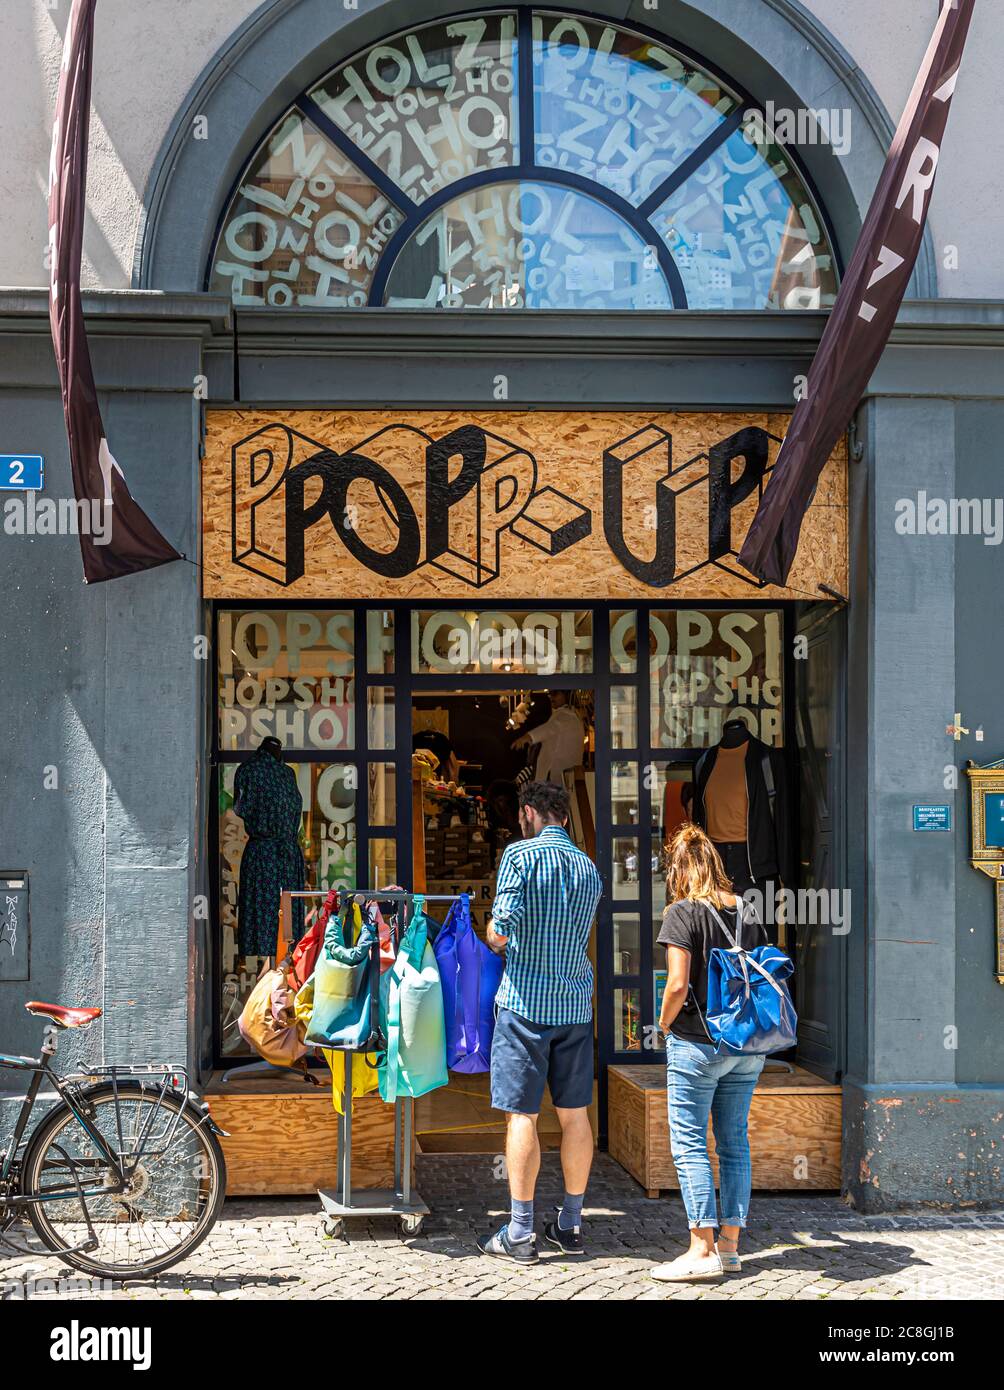 Pop up Store in Basel, Switzerland Stock Photo - Alamy